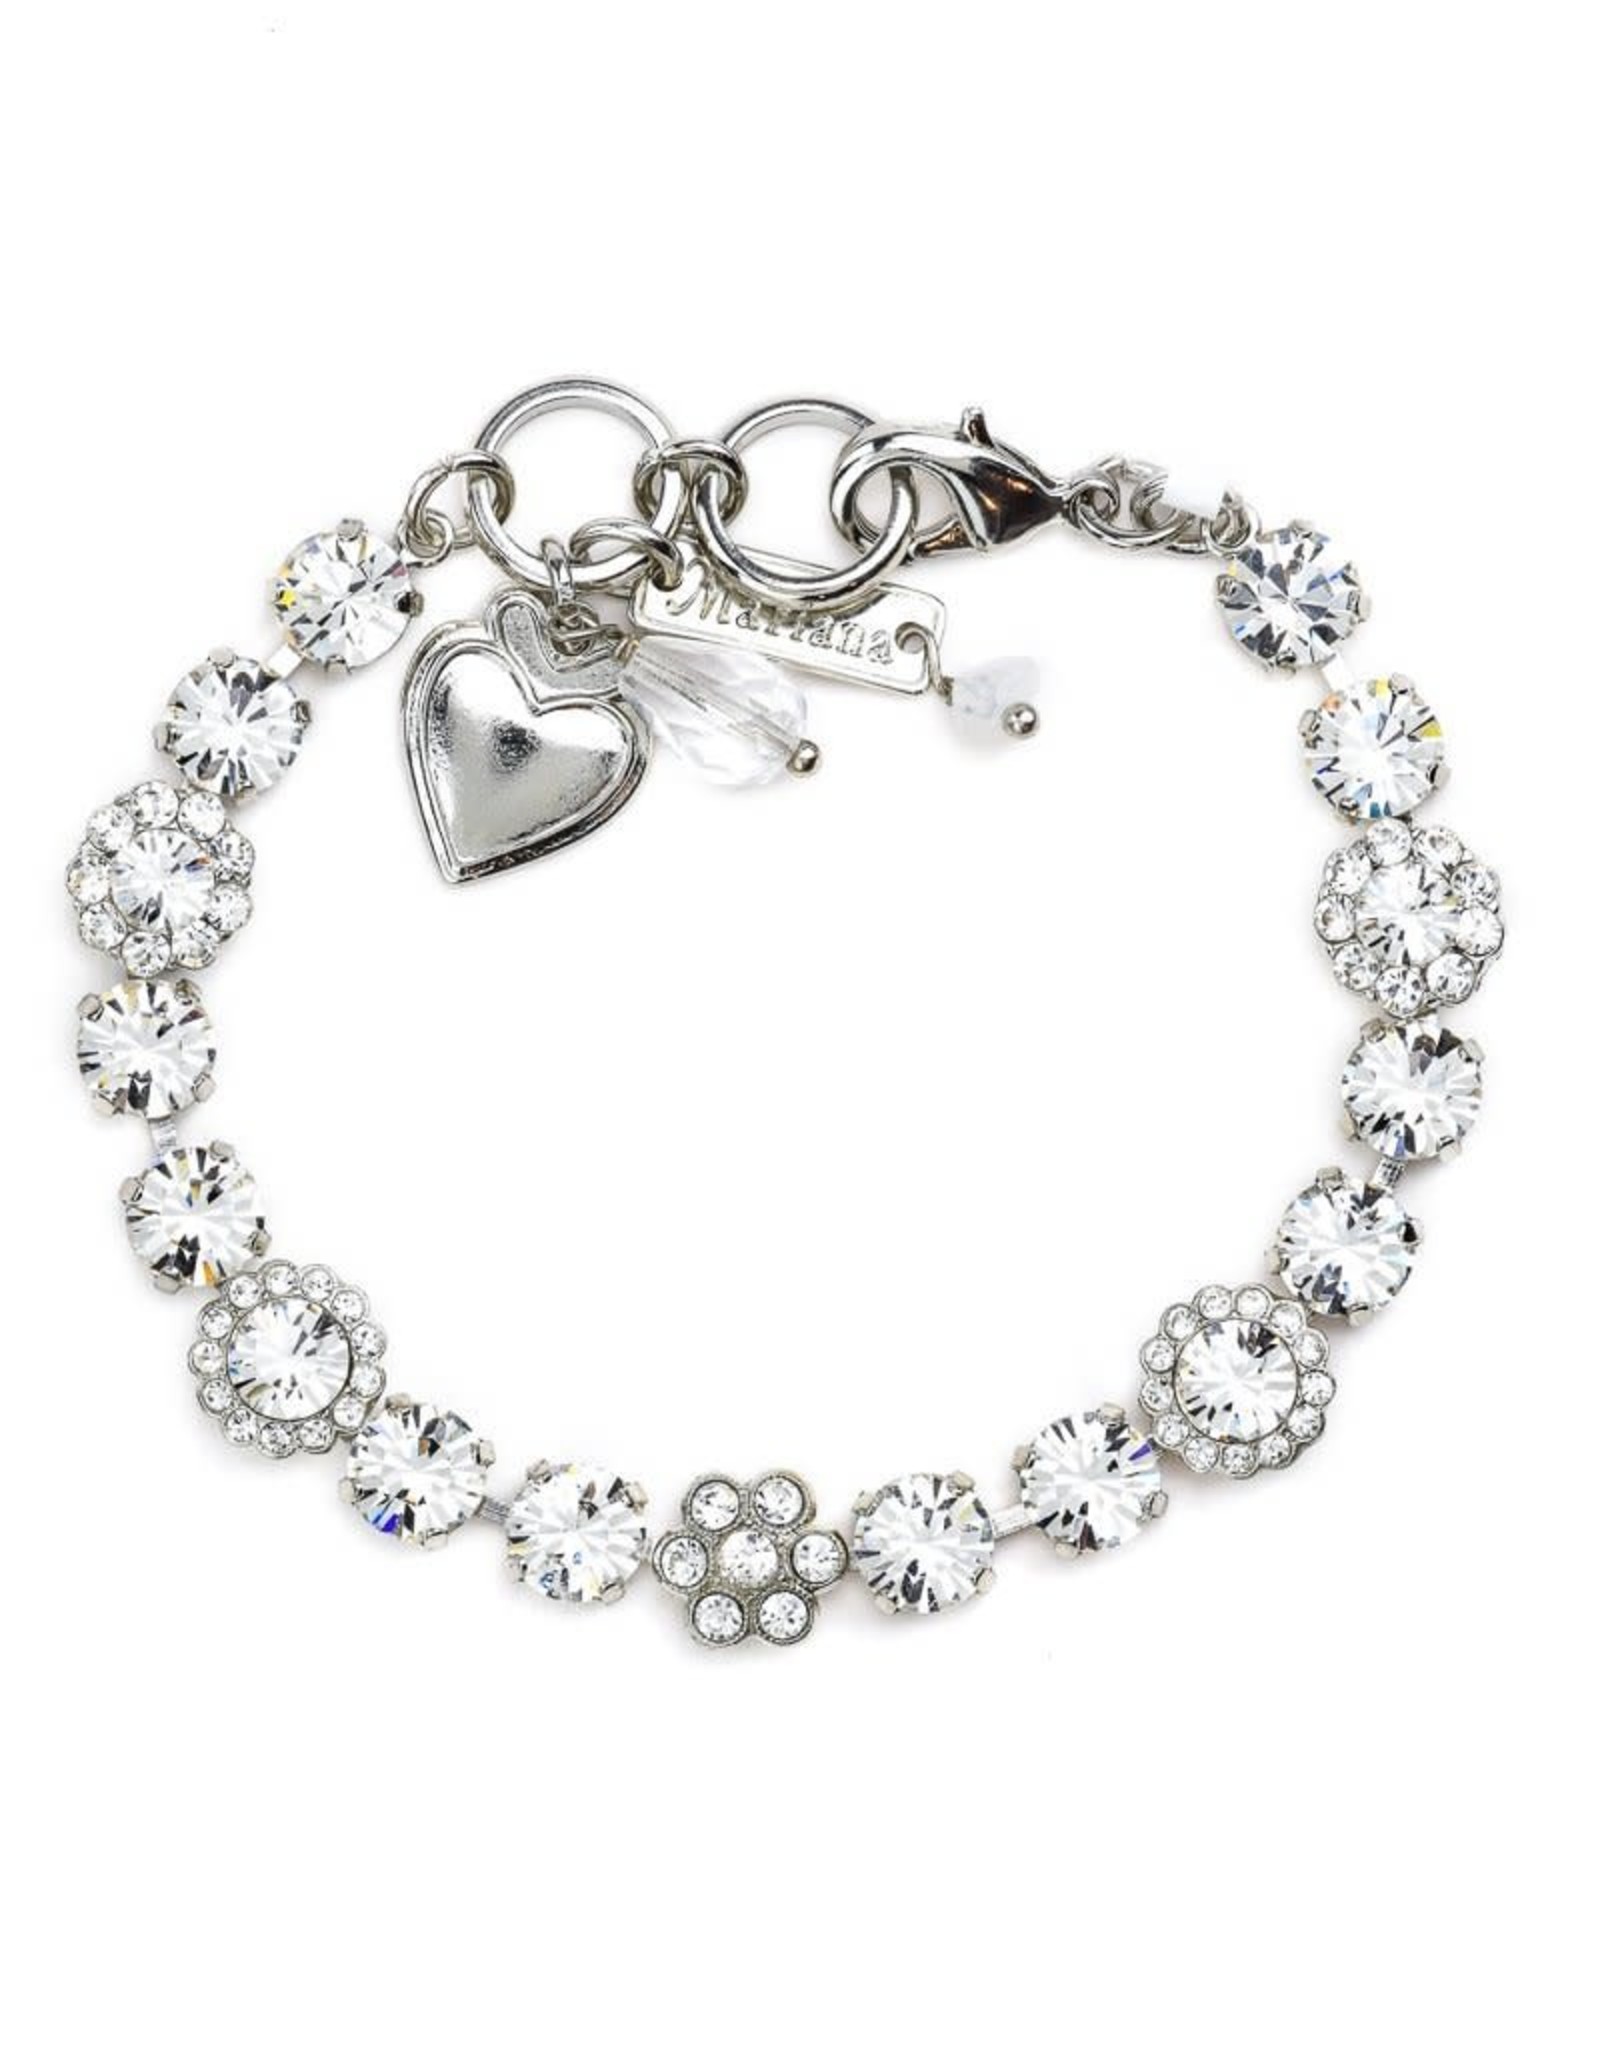 Crystal and Silver Bracelet